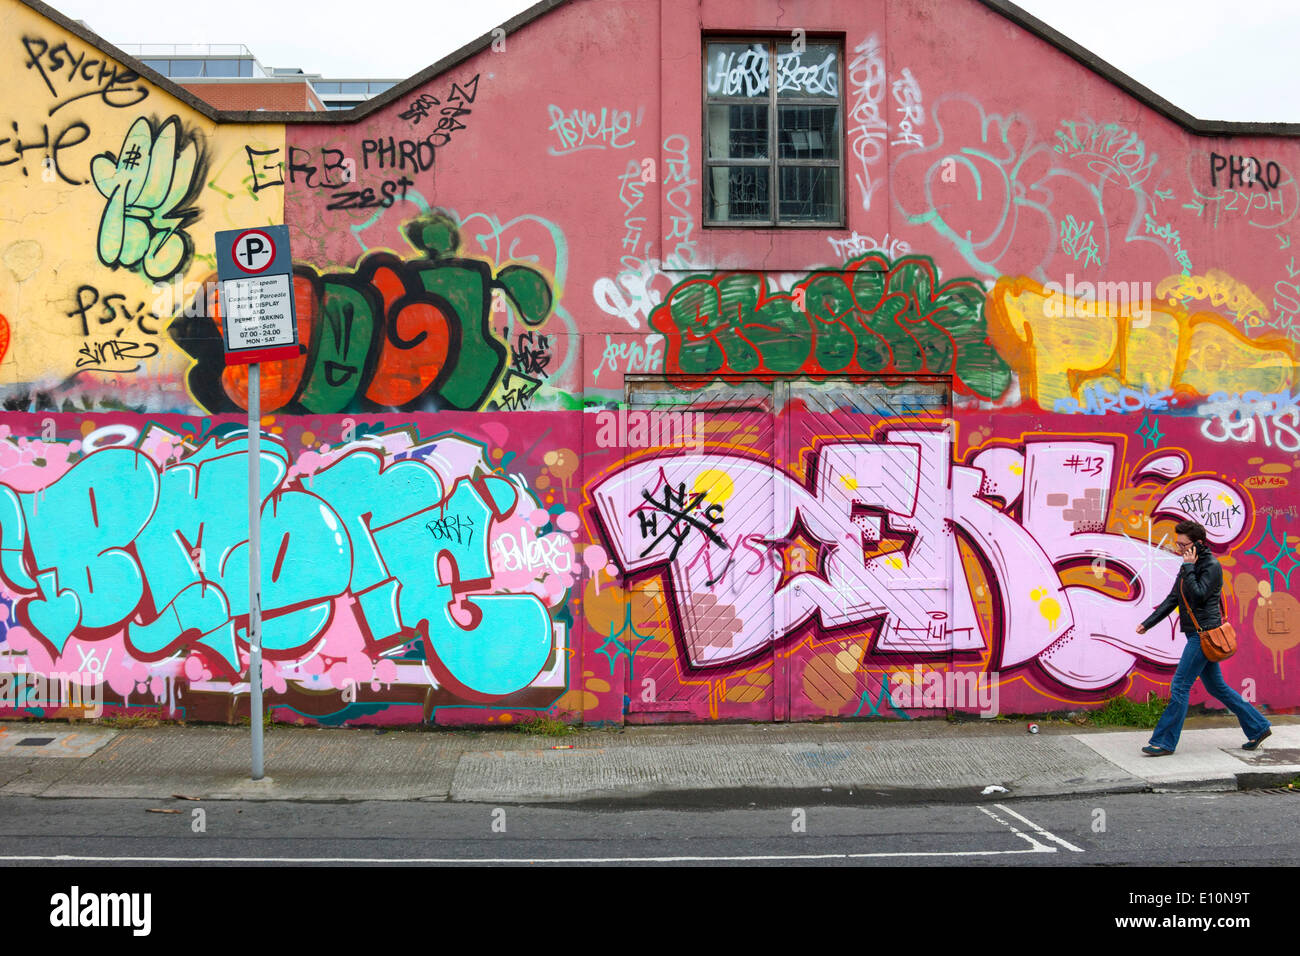 Woman walking in front of Wall Graffiti, Dublin, République d'Irlande, Europe. 02.05.2014 Banque D'Images